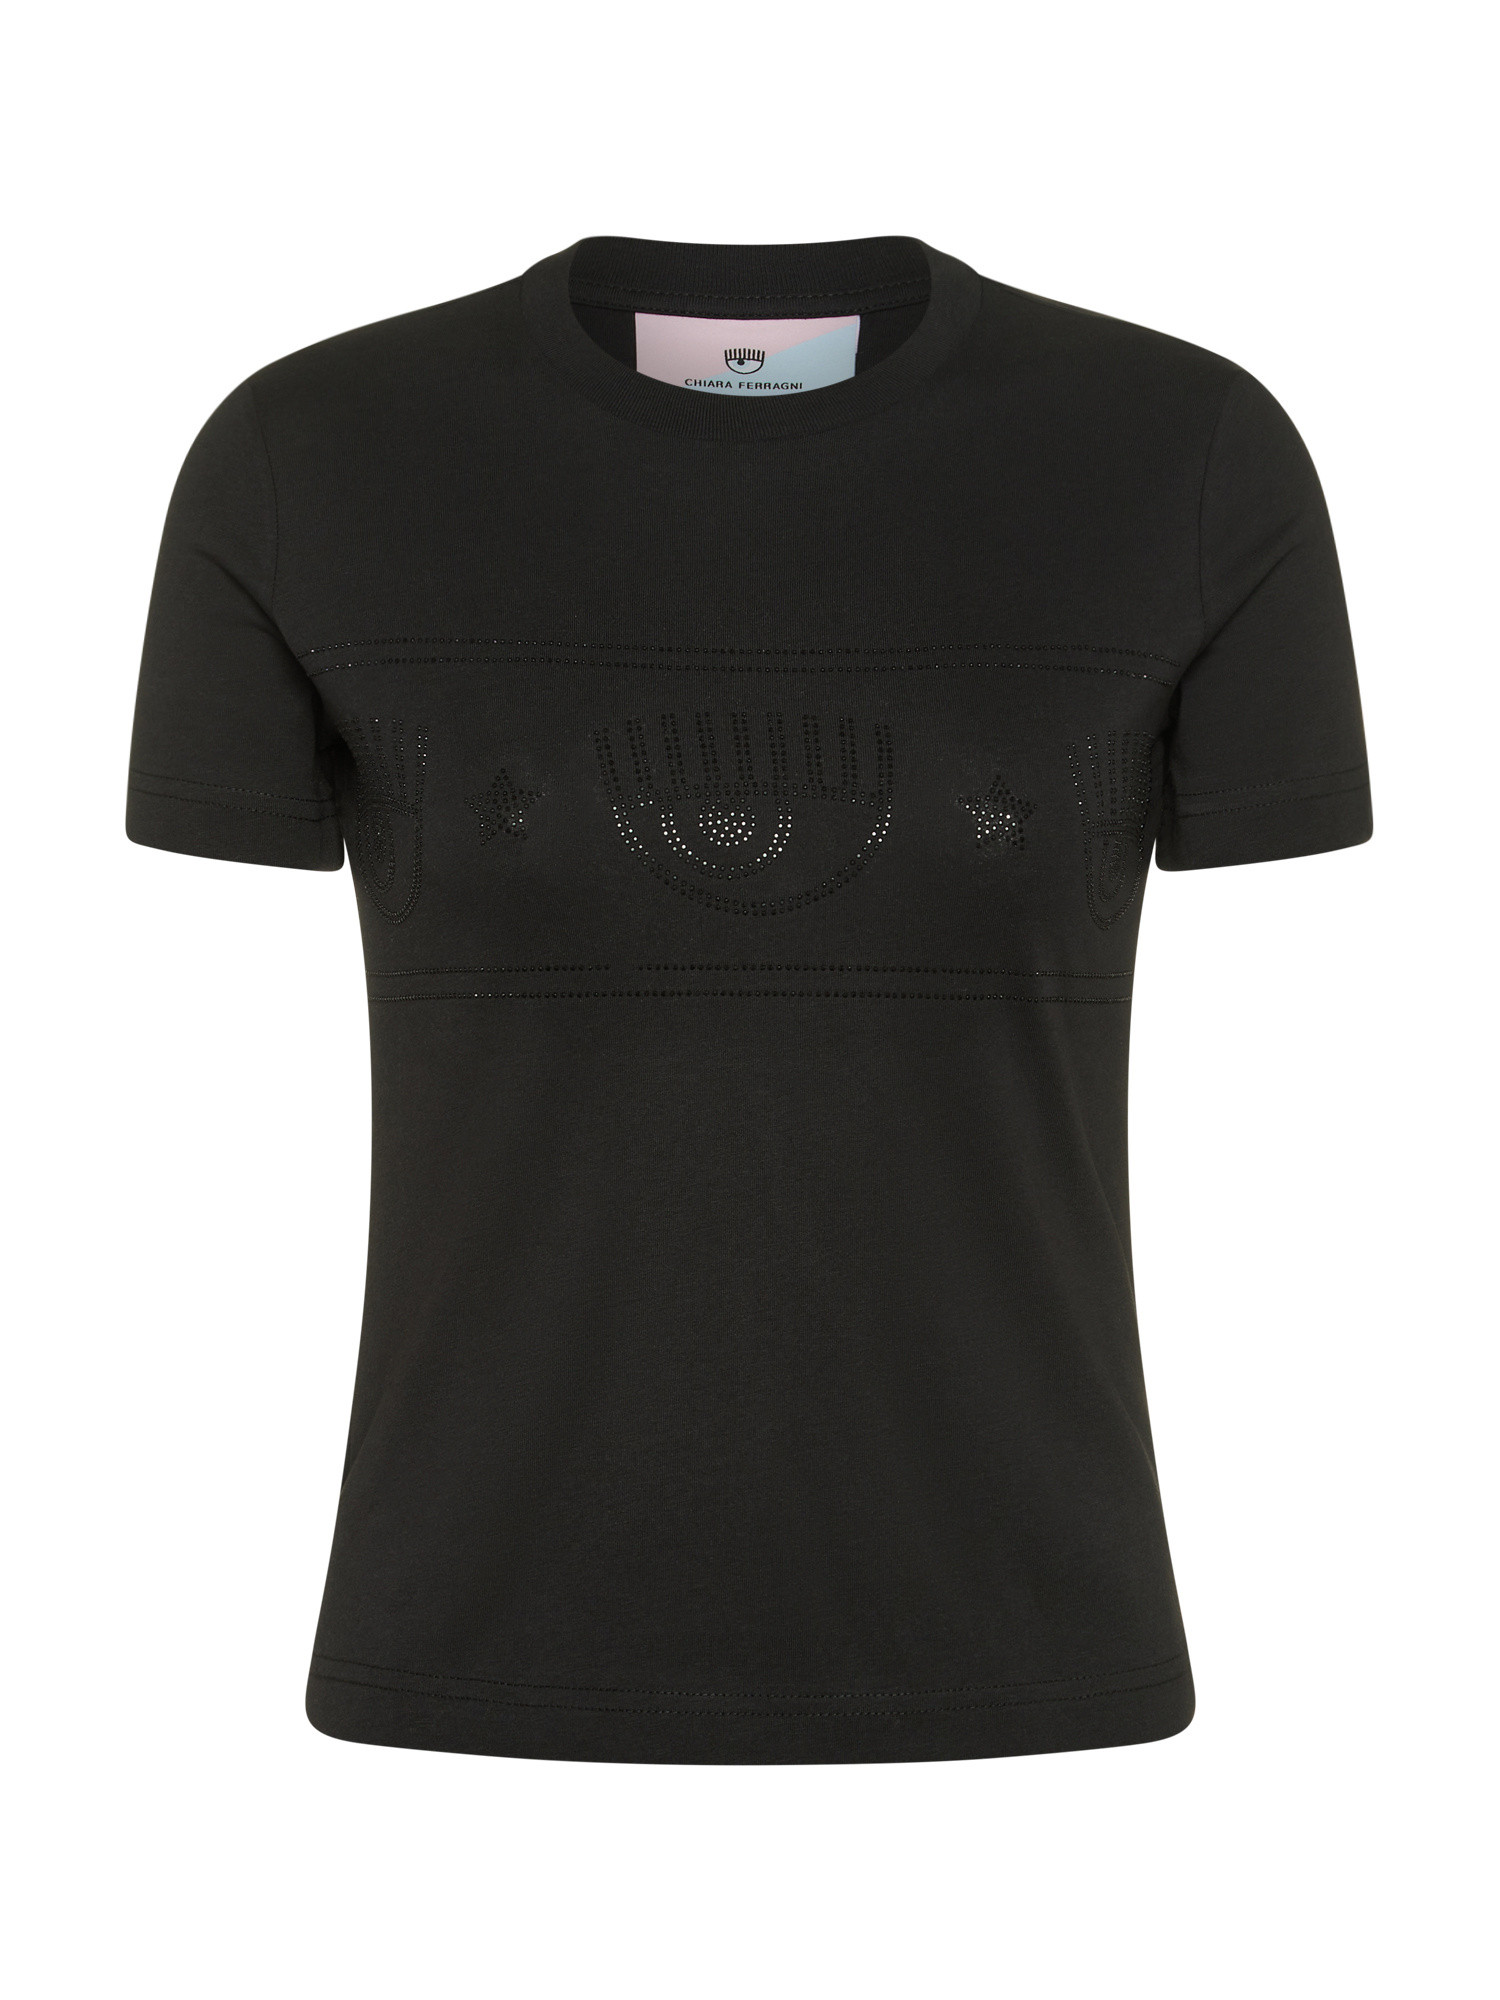 Chiara Ferragni - Eyestar rhinestone logo T-shirt, Black, large image number 0